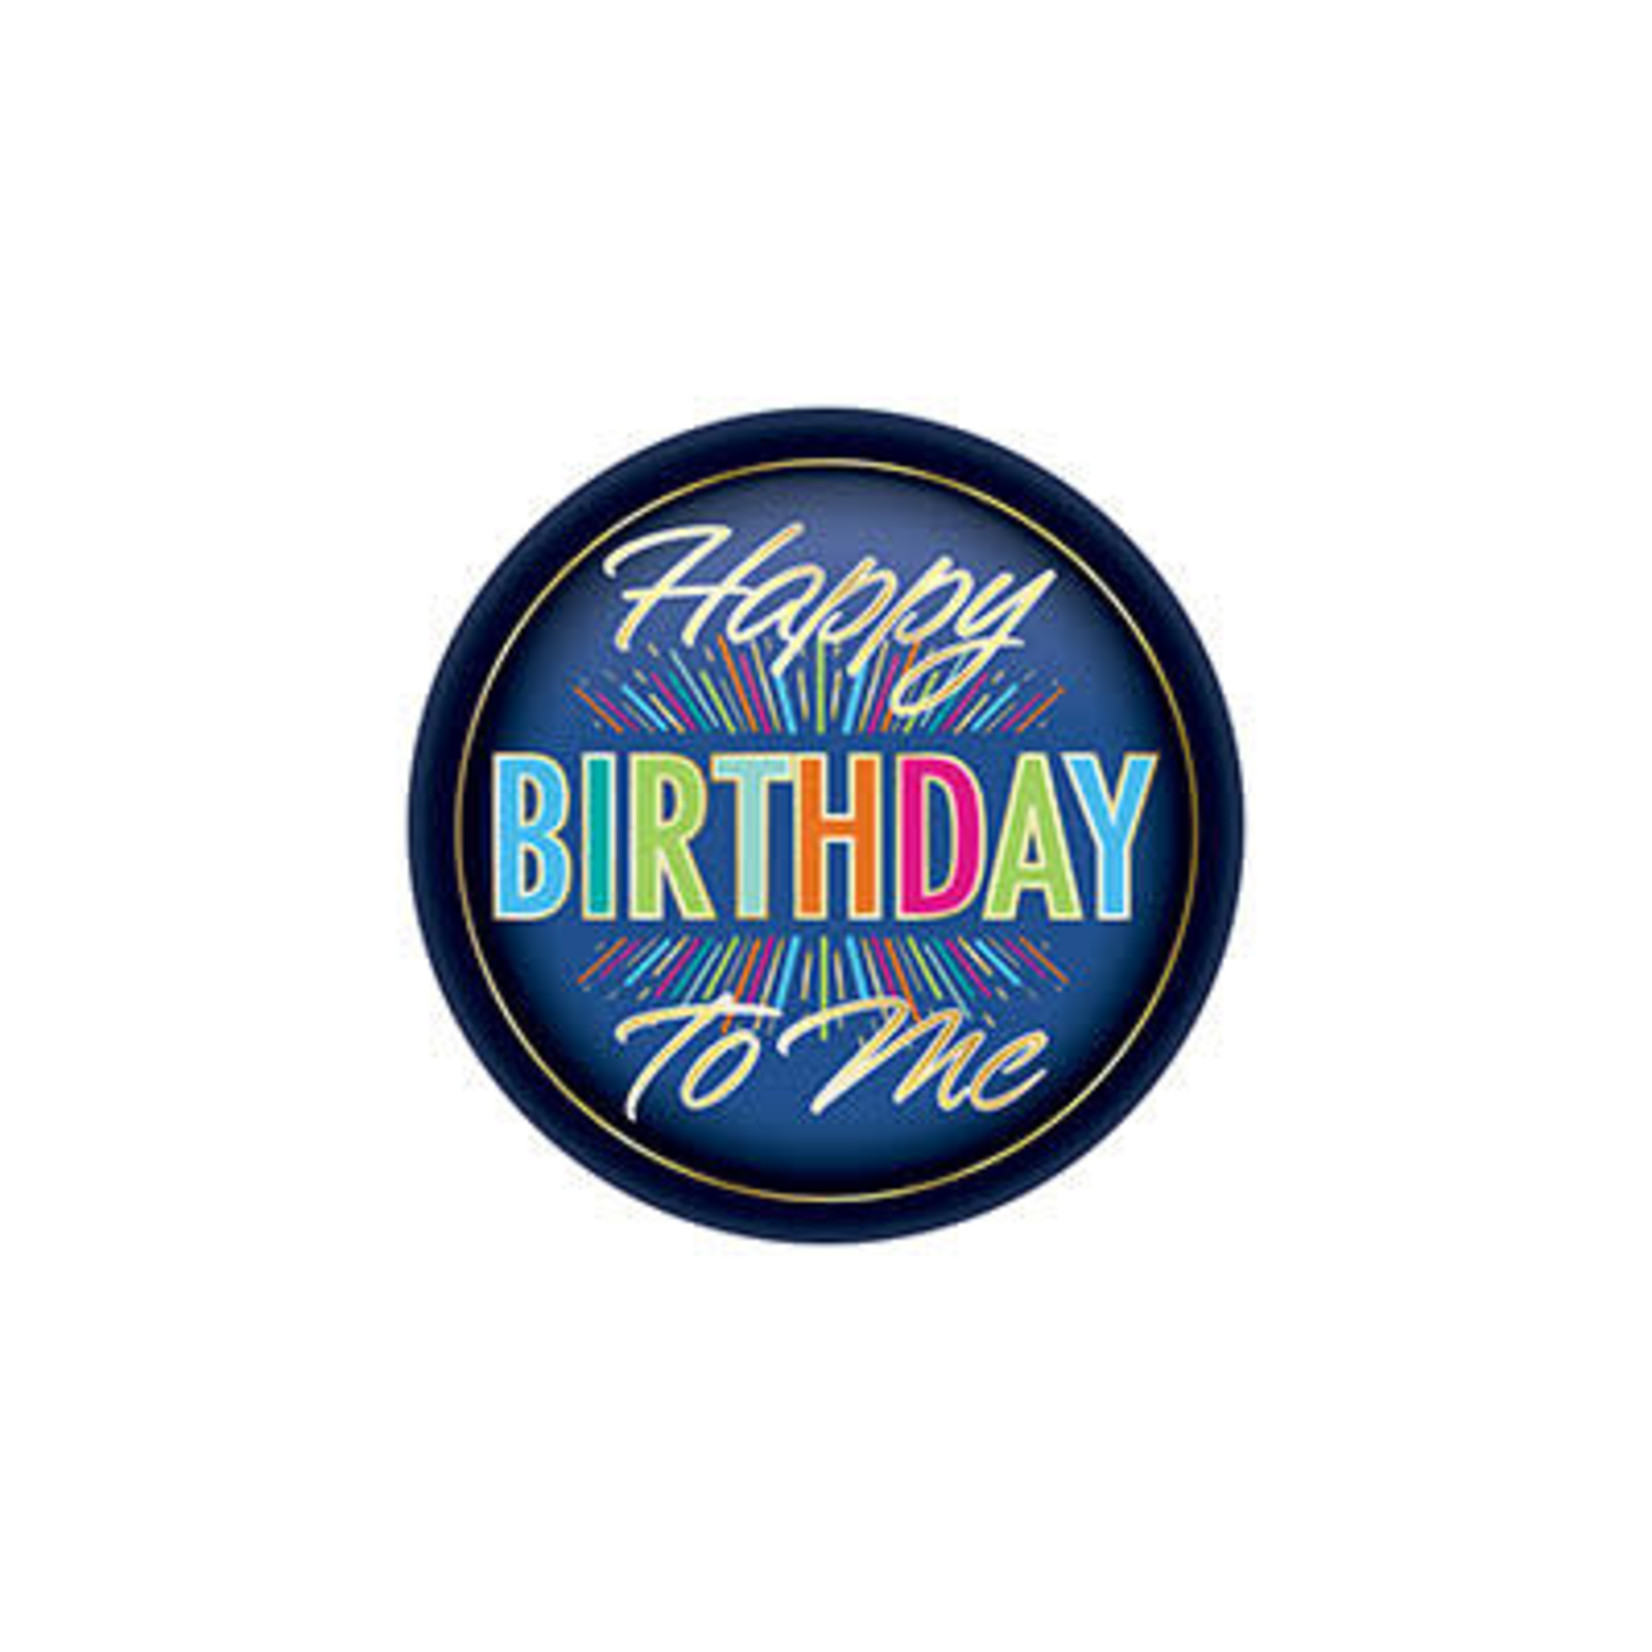 Beistle Happy Birthday To Me Button - 1ct.